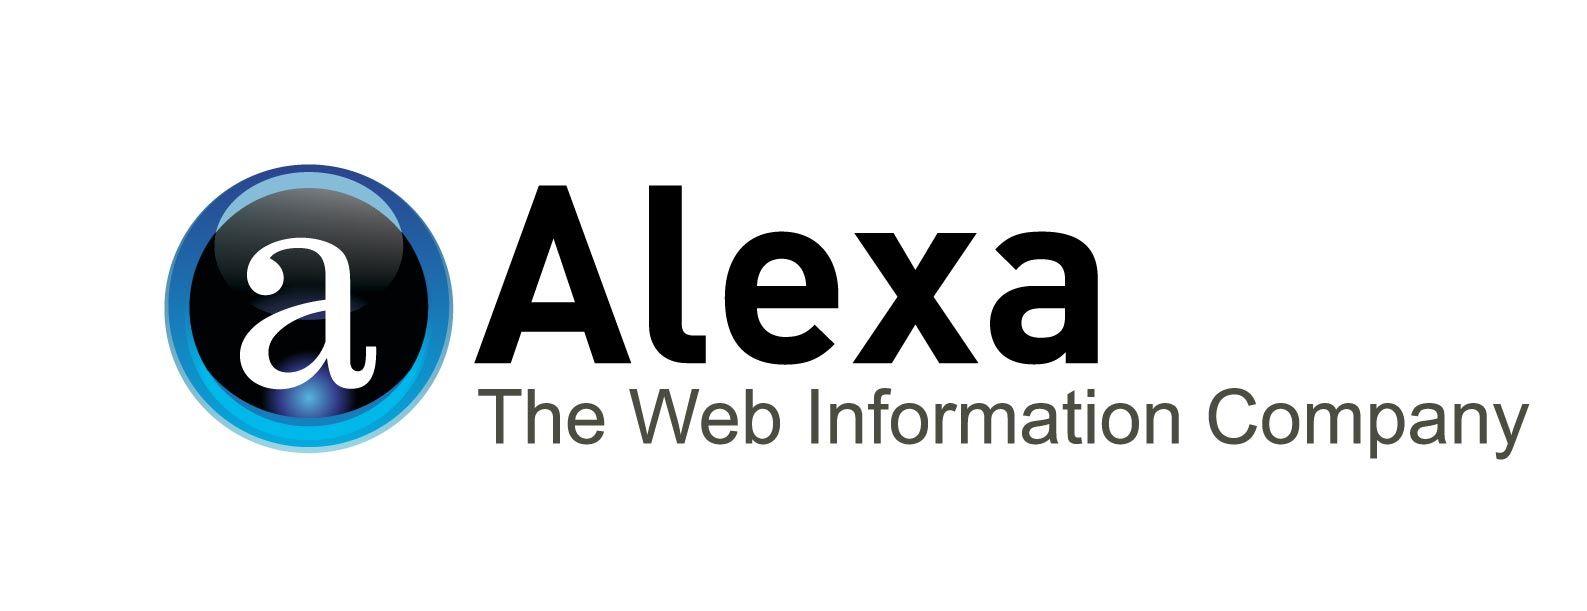 Alexa.com Logo - How to Improve Your Alexa Ranking and Website Traffic